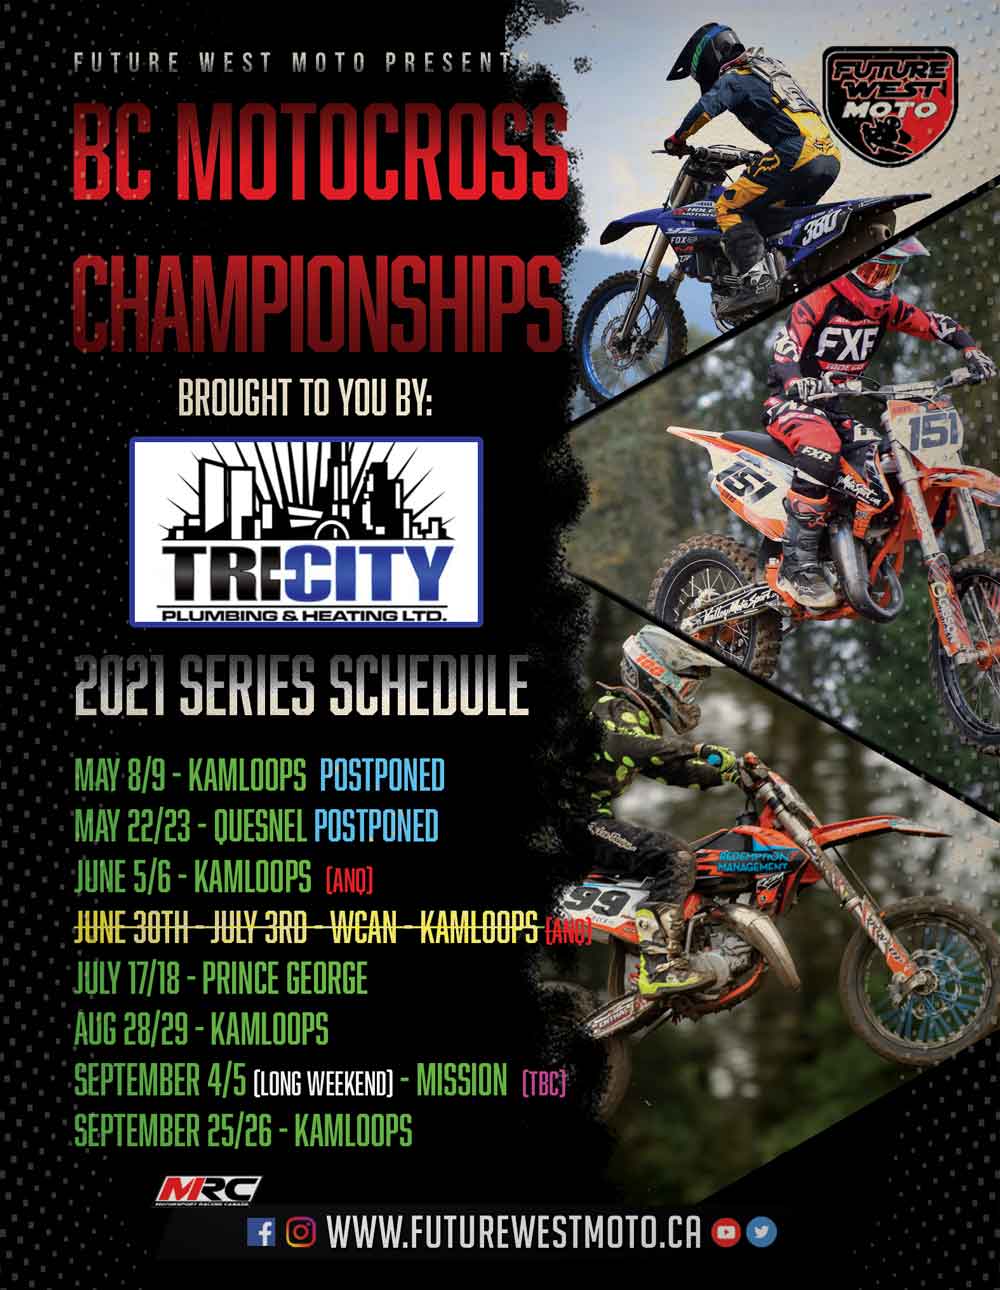 Motocross Race Schedule - Future West Moto